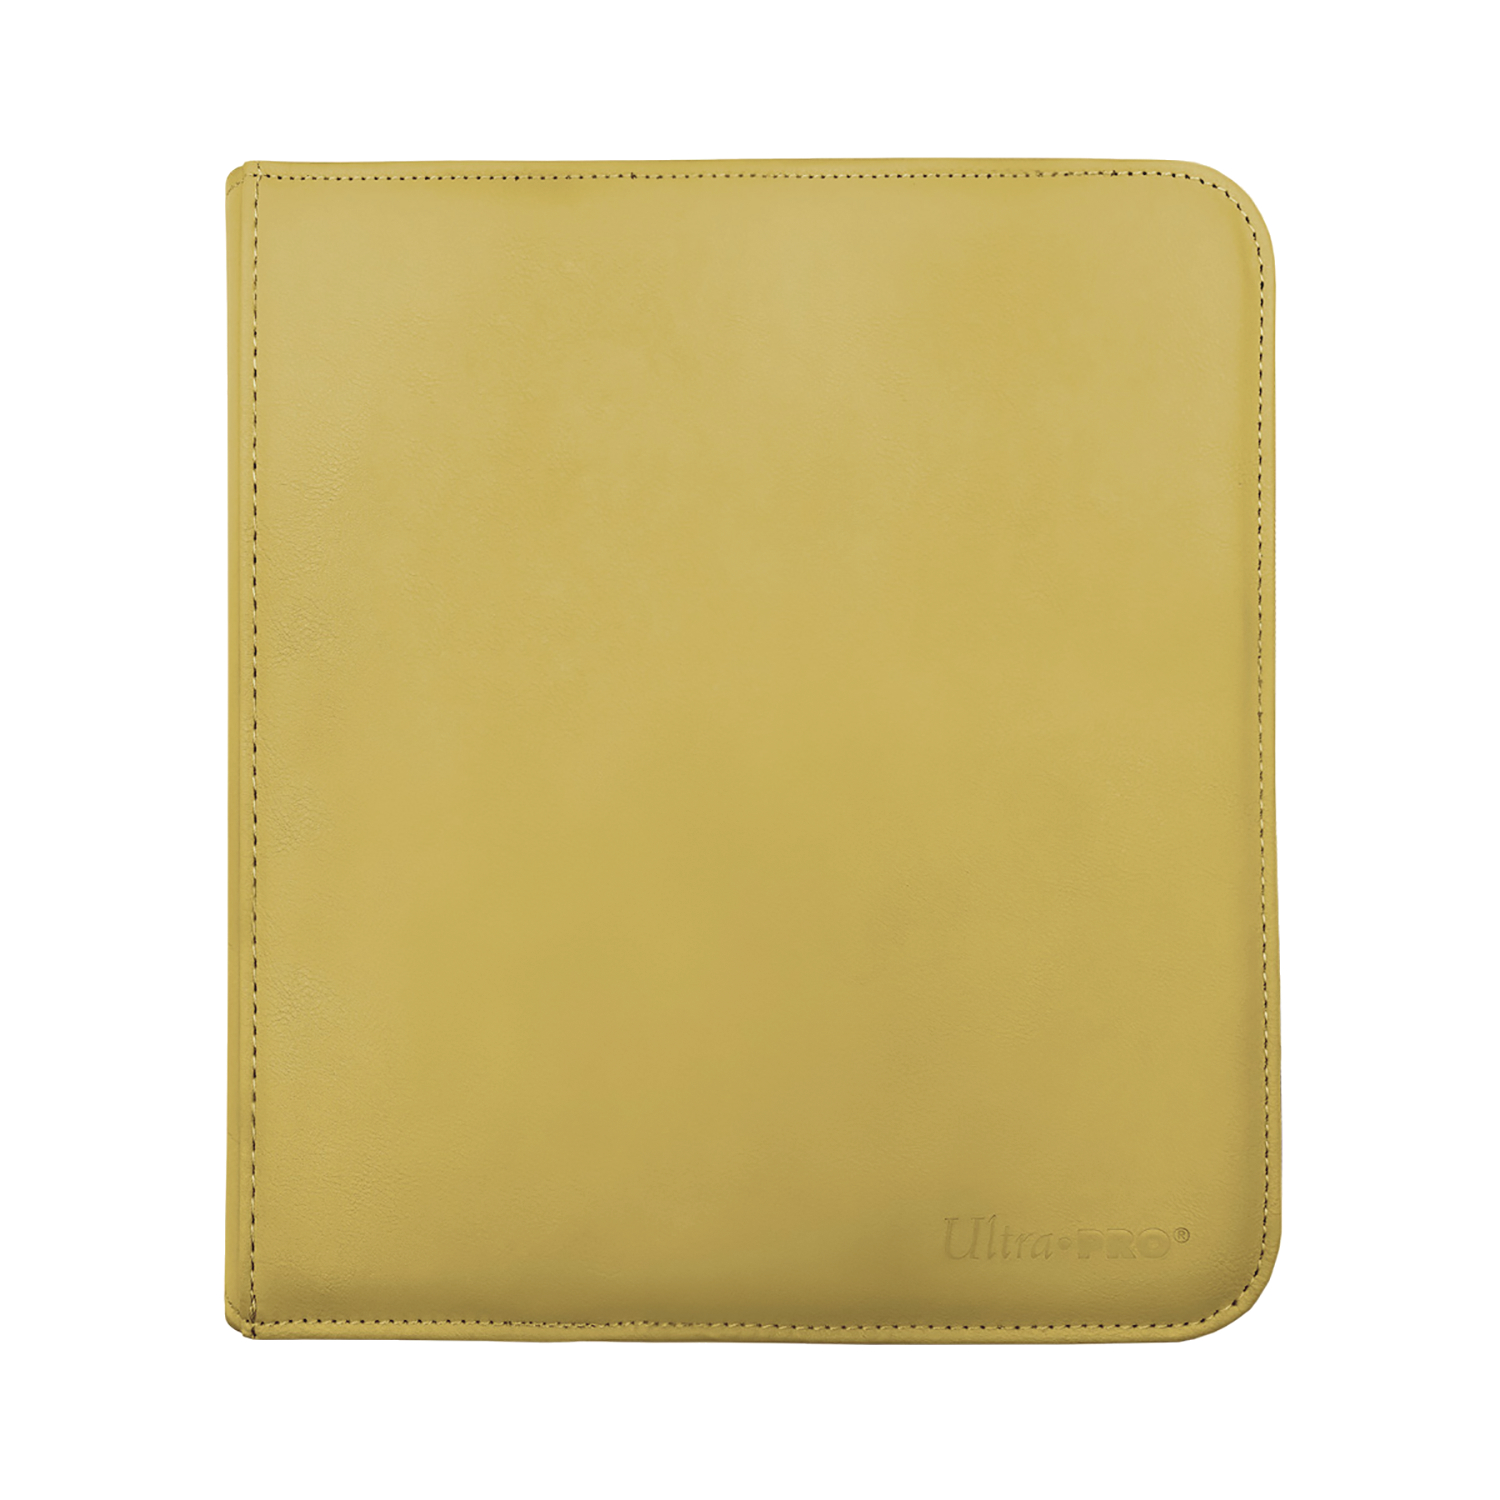 12 Pocket Zippered Pro Binder Yellow